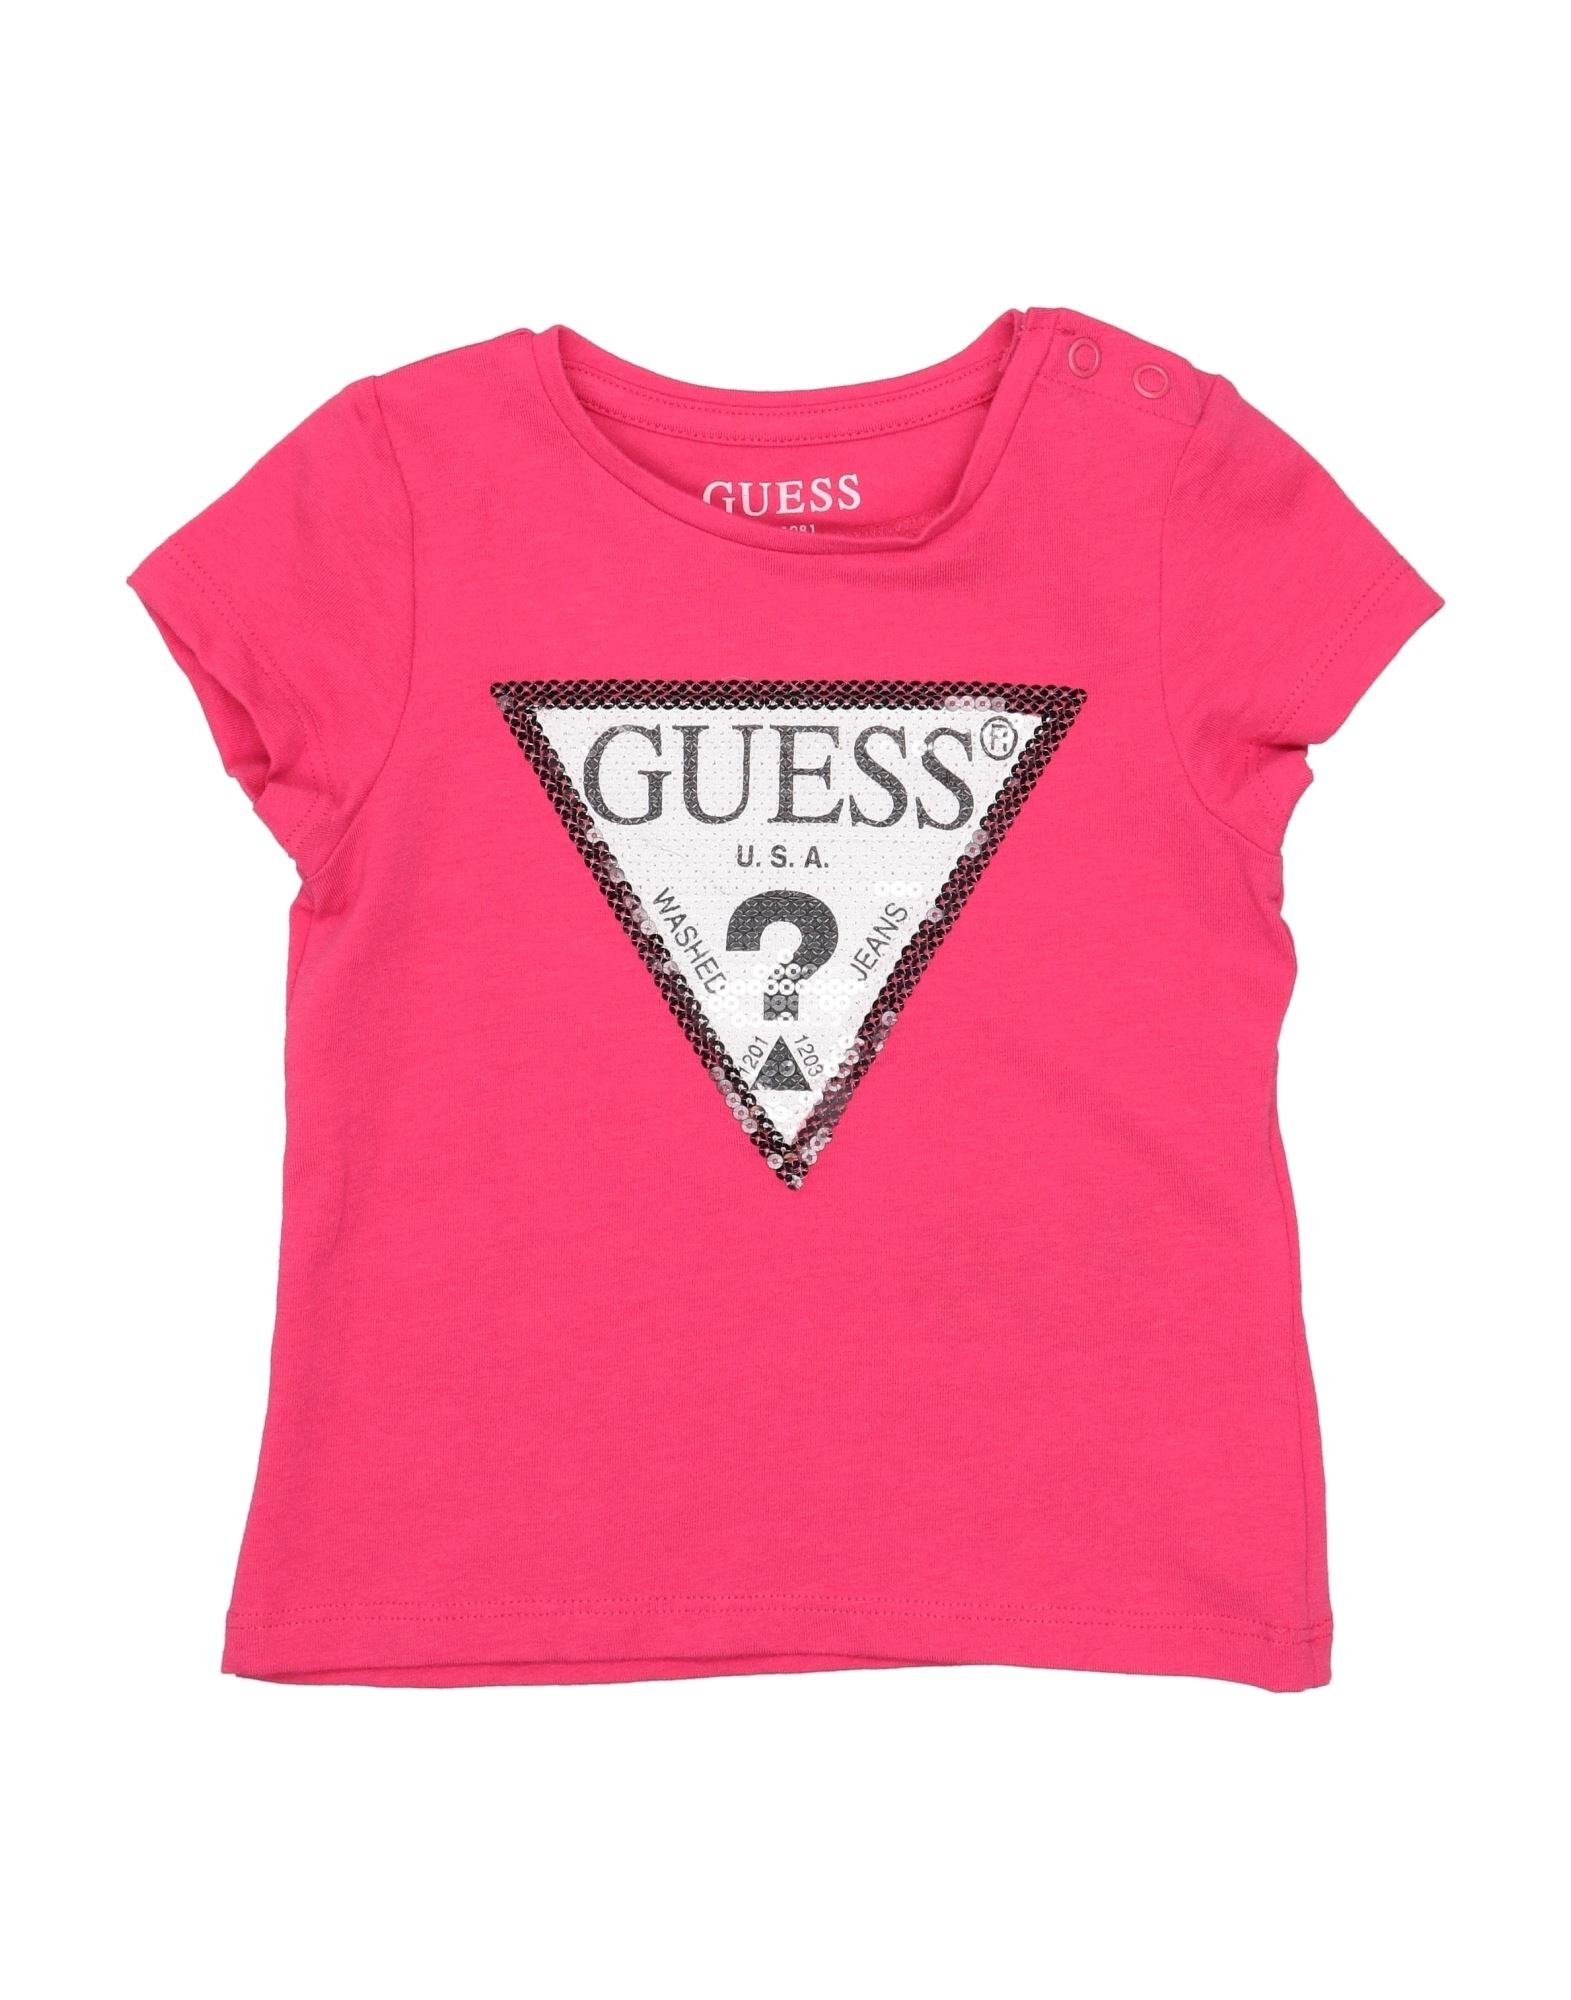 GUESS T-shirts Kinder Fuchsia von GUESS